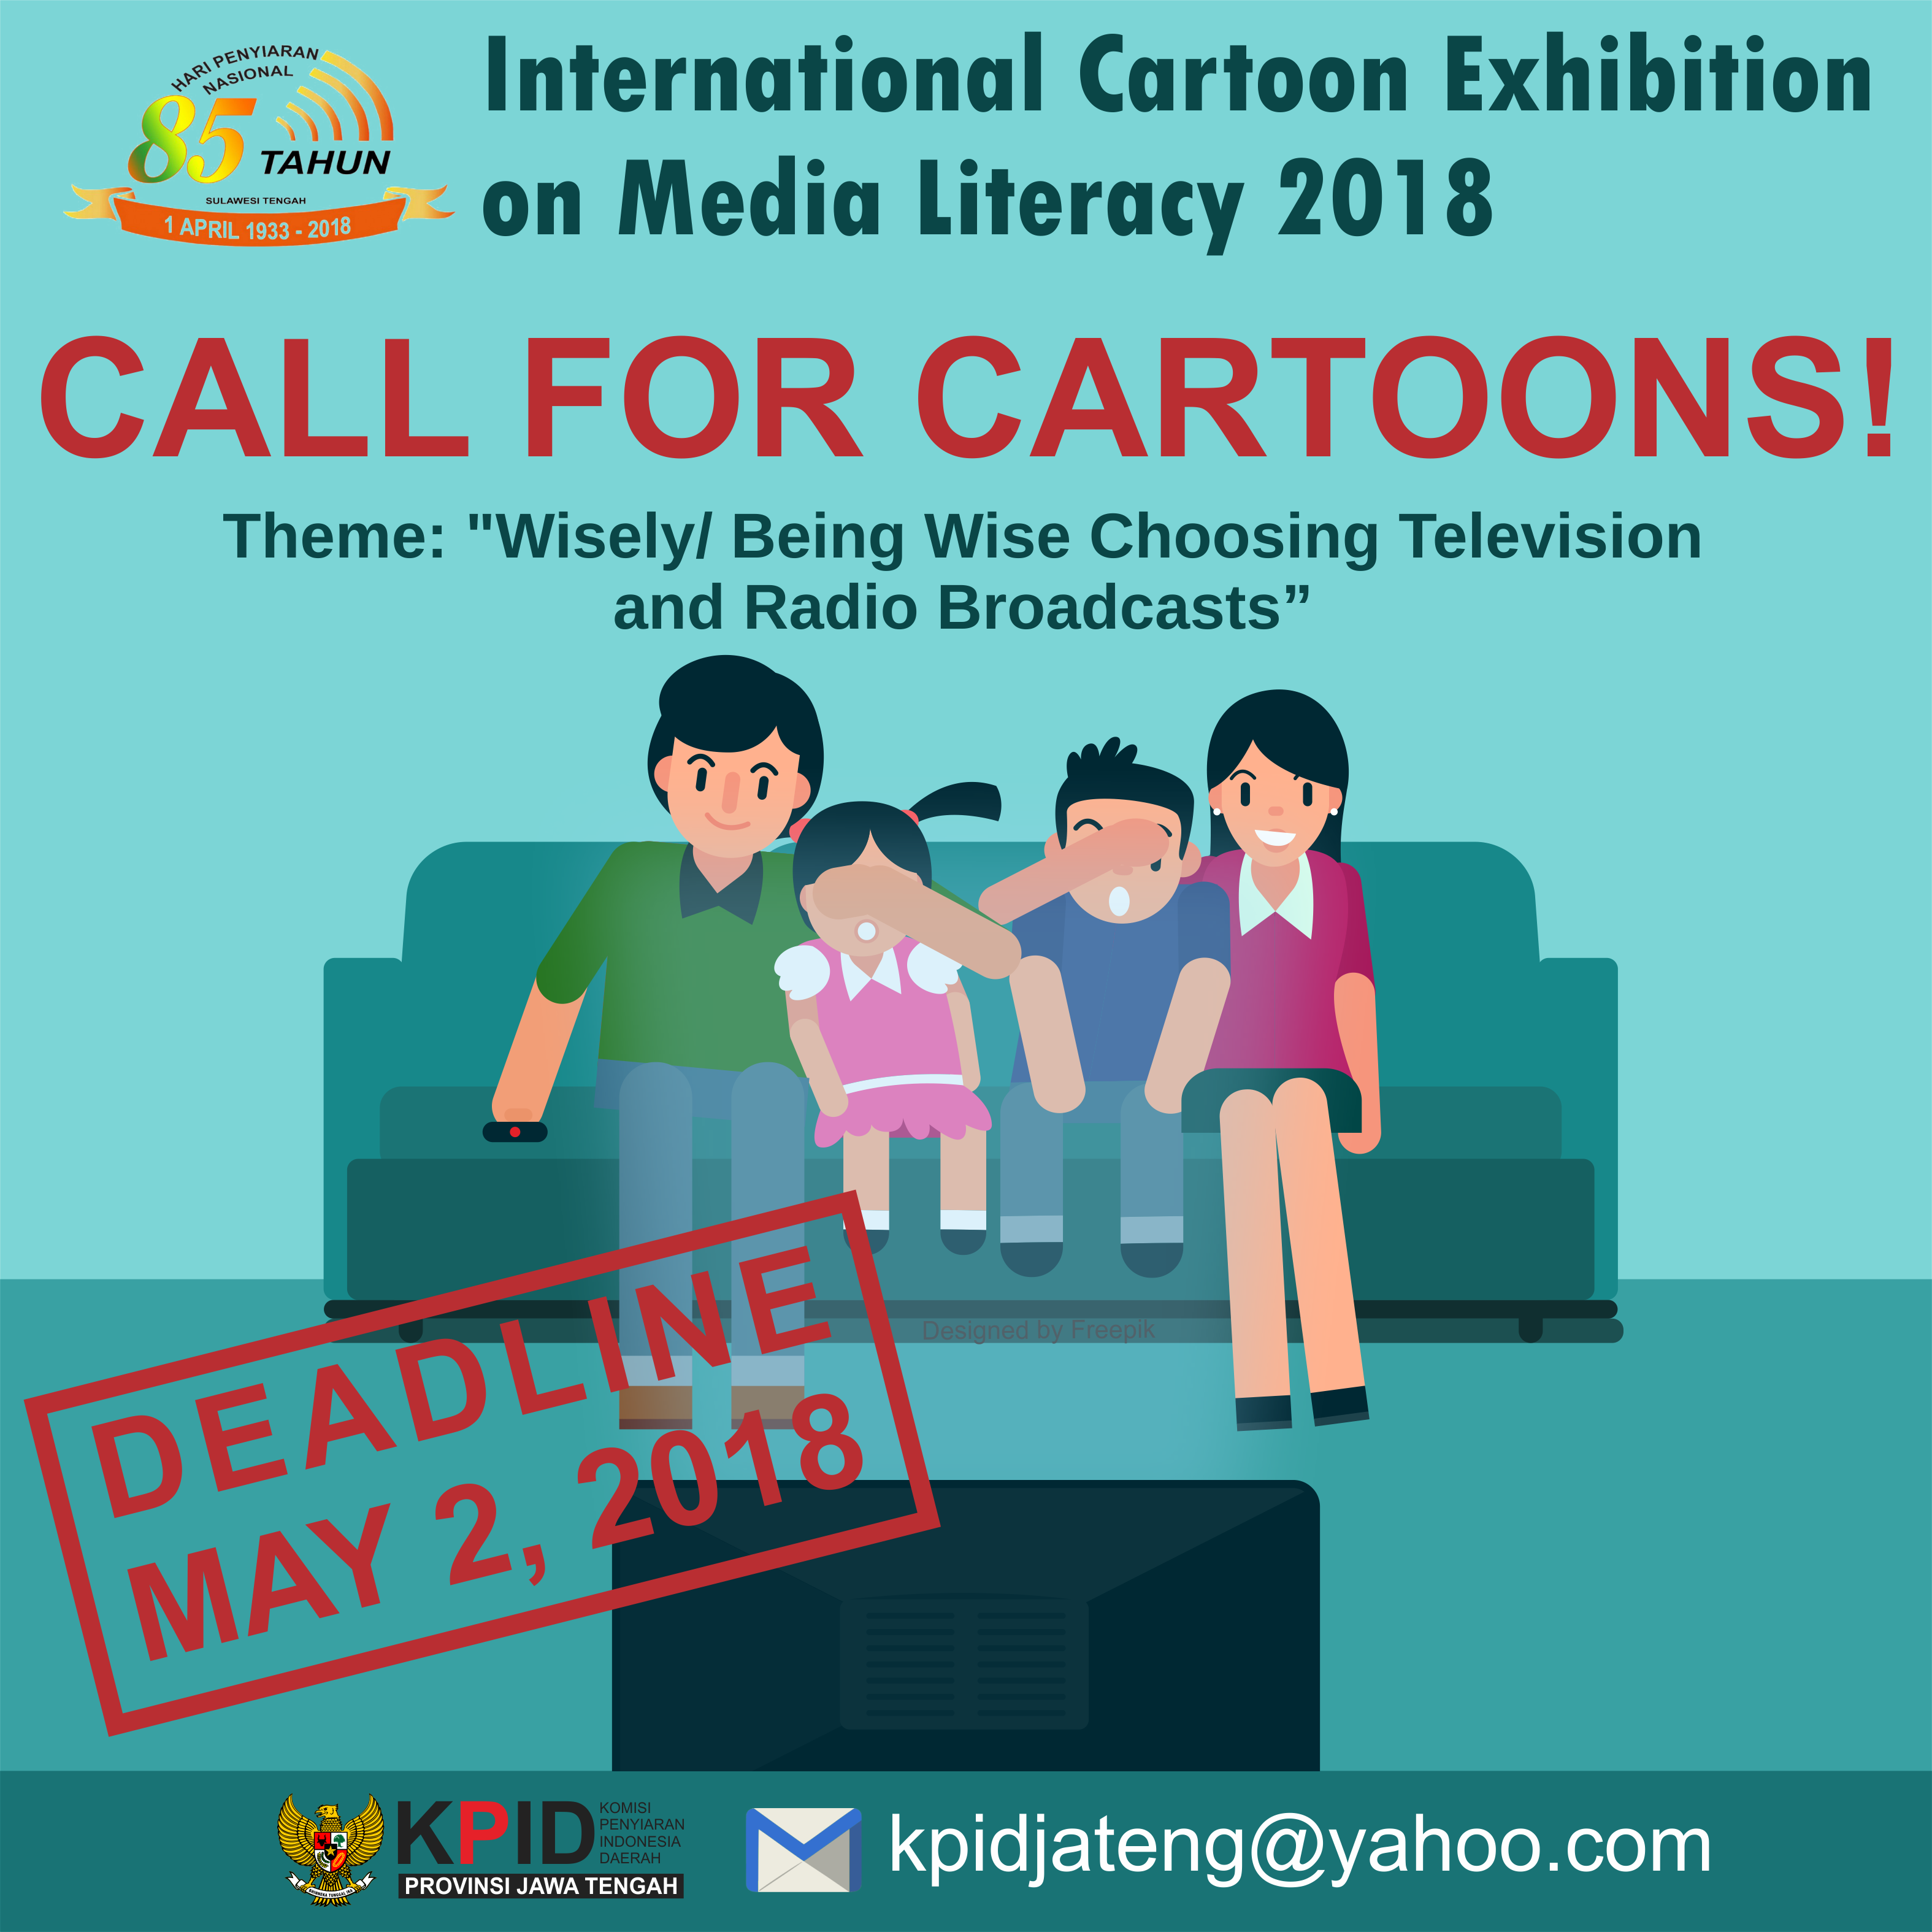 International Cartoon Exhibition on Media Literacy 2018